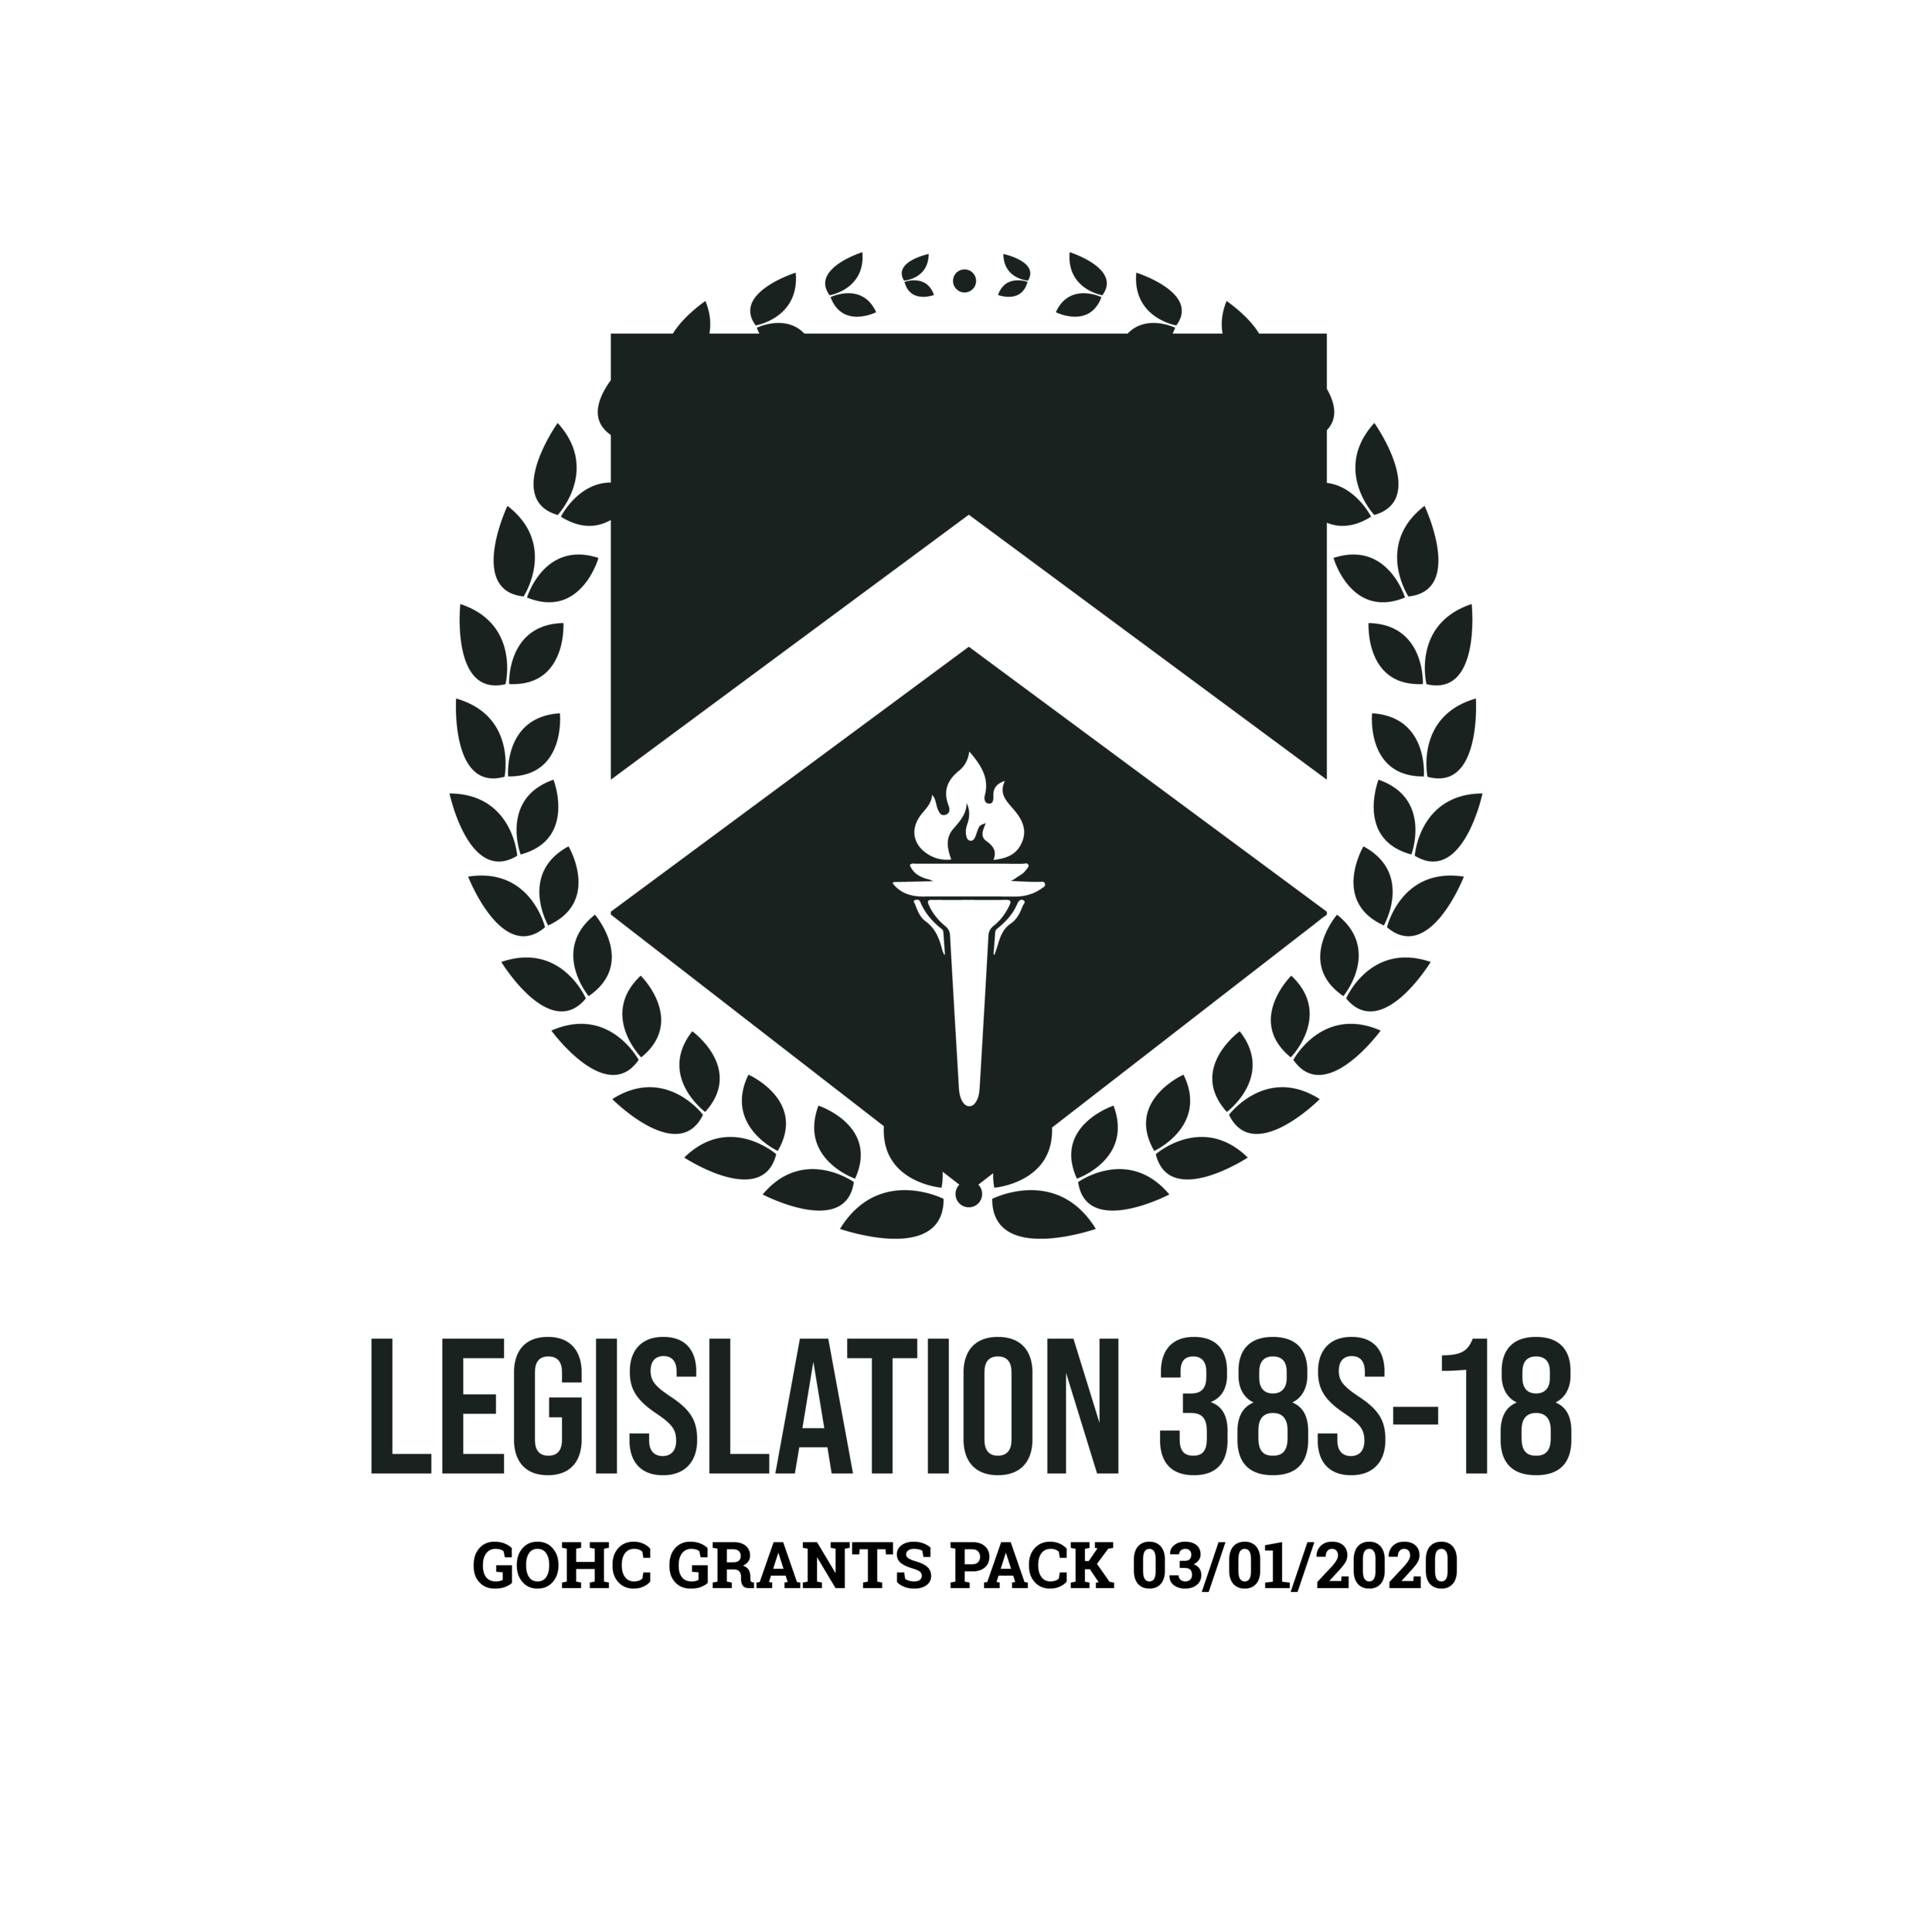 Legislation 38S-18: PASSED